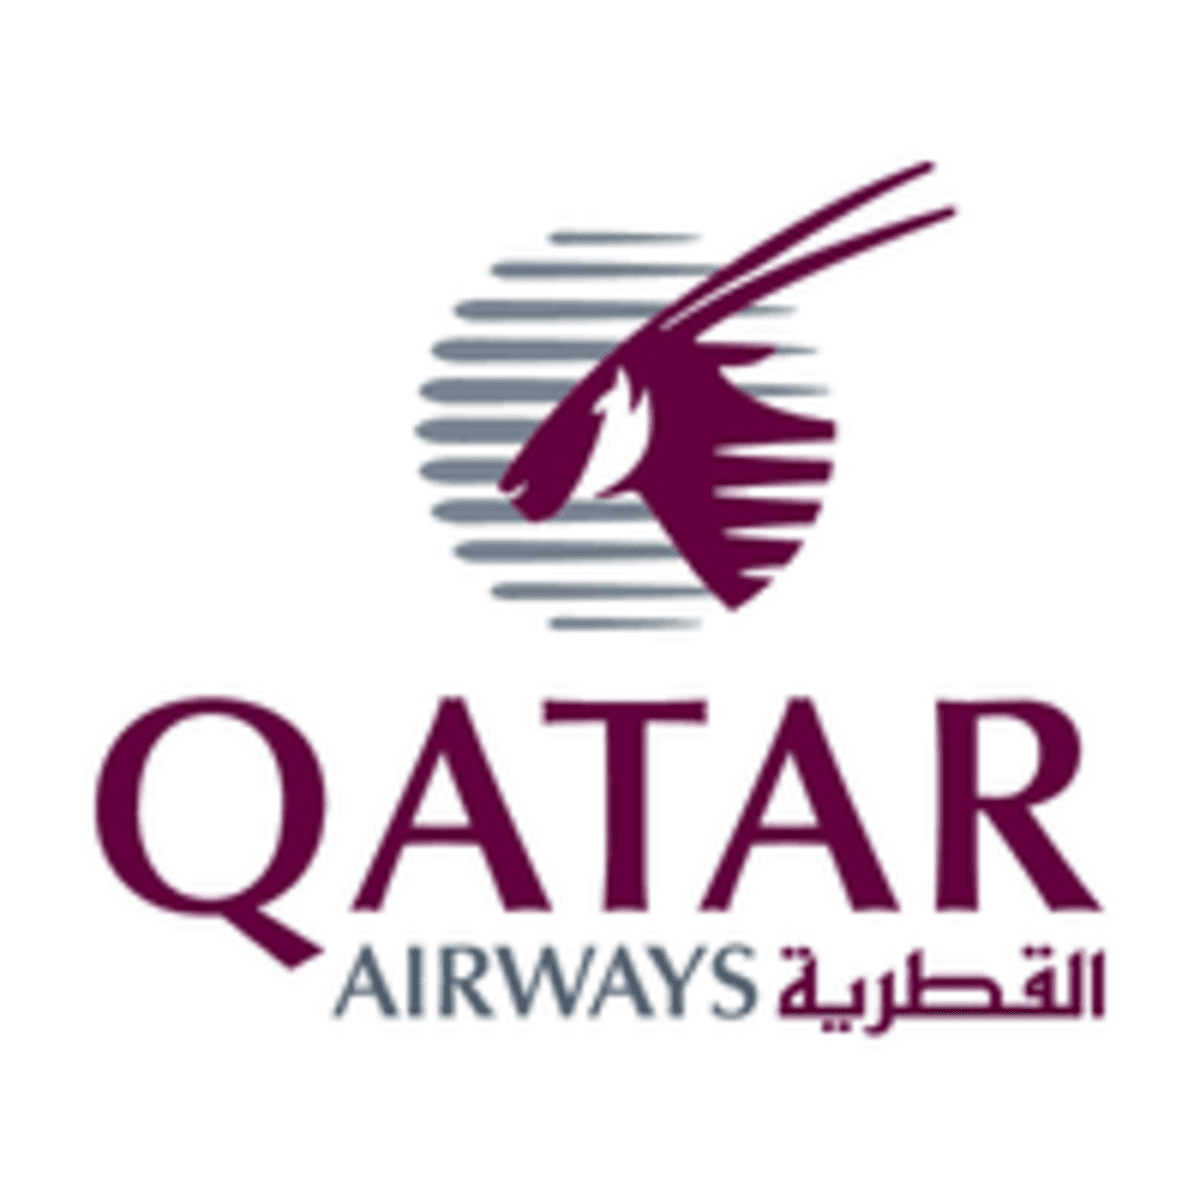 Job Opportunities at Qatar Airways Tanzania, Nafasi za kazi Qatar Airways, Ajira Mpya Qatar Airways, Qatar Airways Jobs in Tanzania 2021, Job Vacancies at Qatar Airways 2021